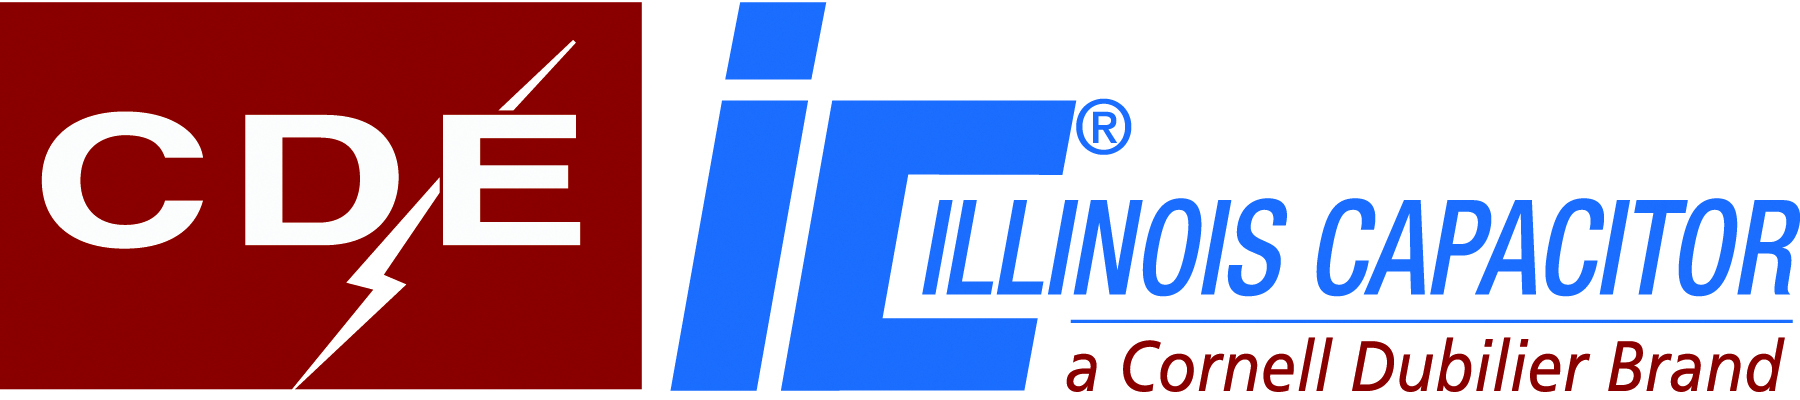 Manu_logo_CDE-Illinois-Capacitor.jpg